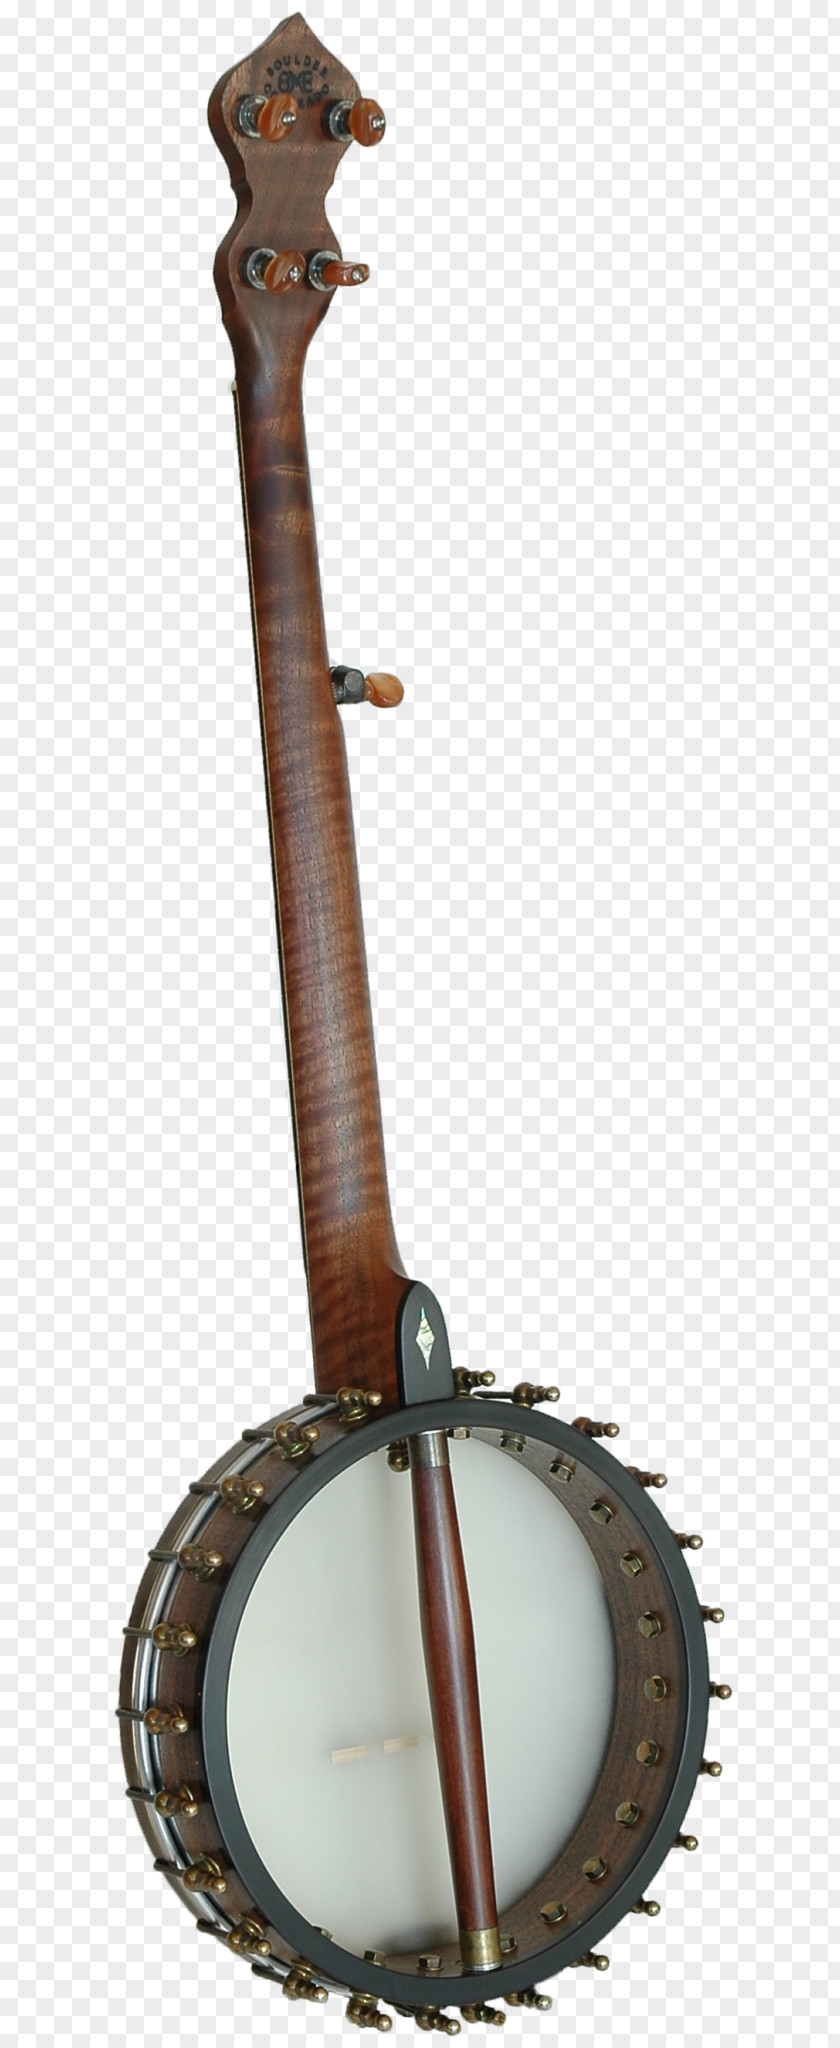 Musical Instruments Banjo Guitar Uke String PNG